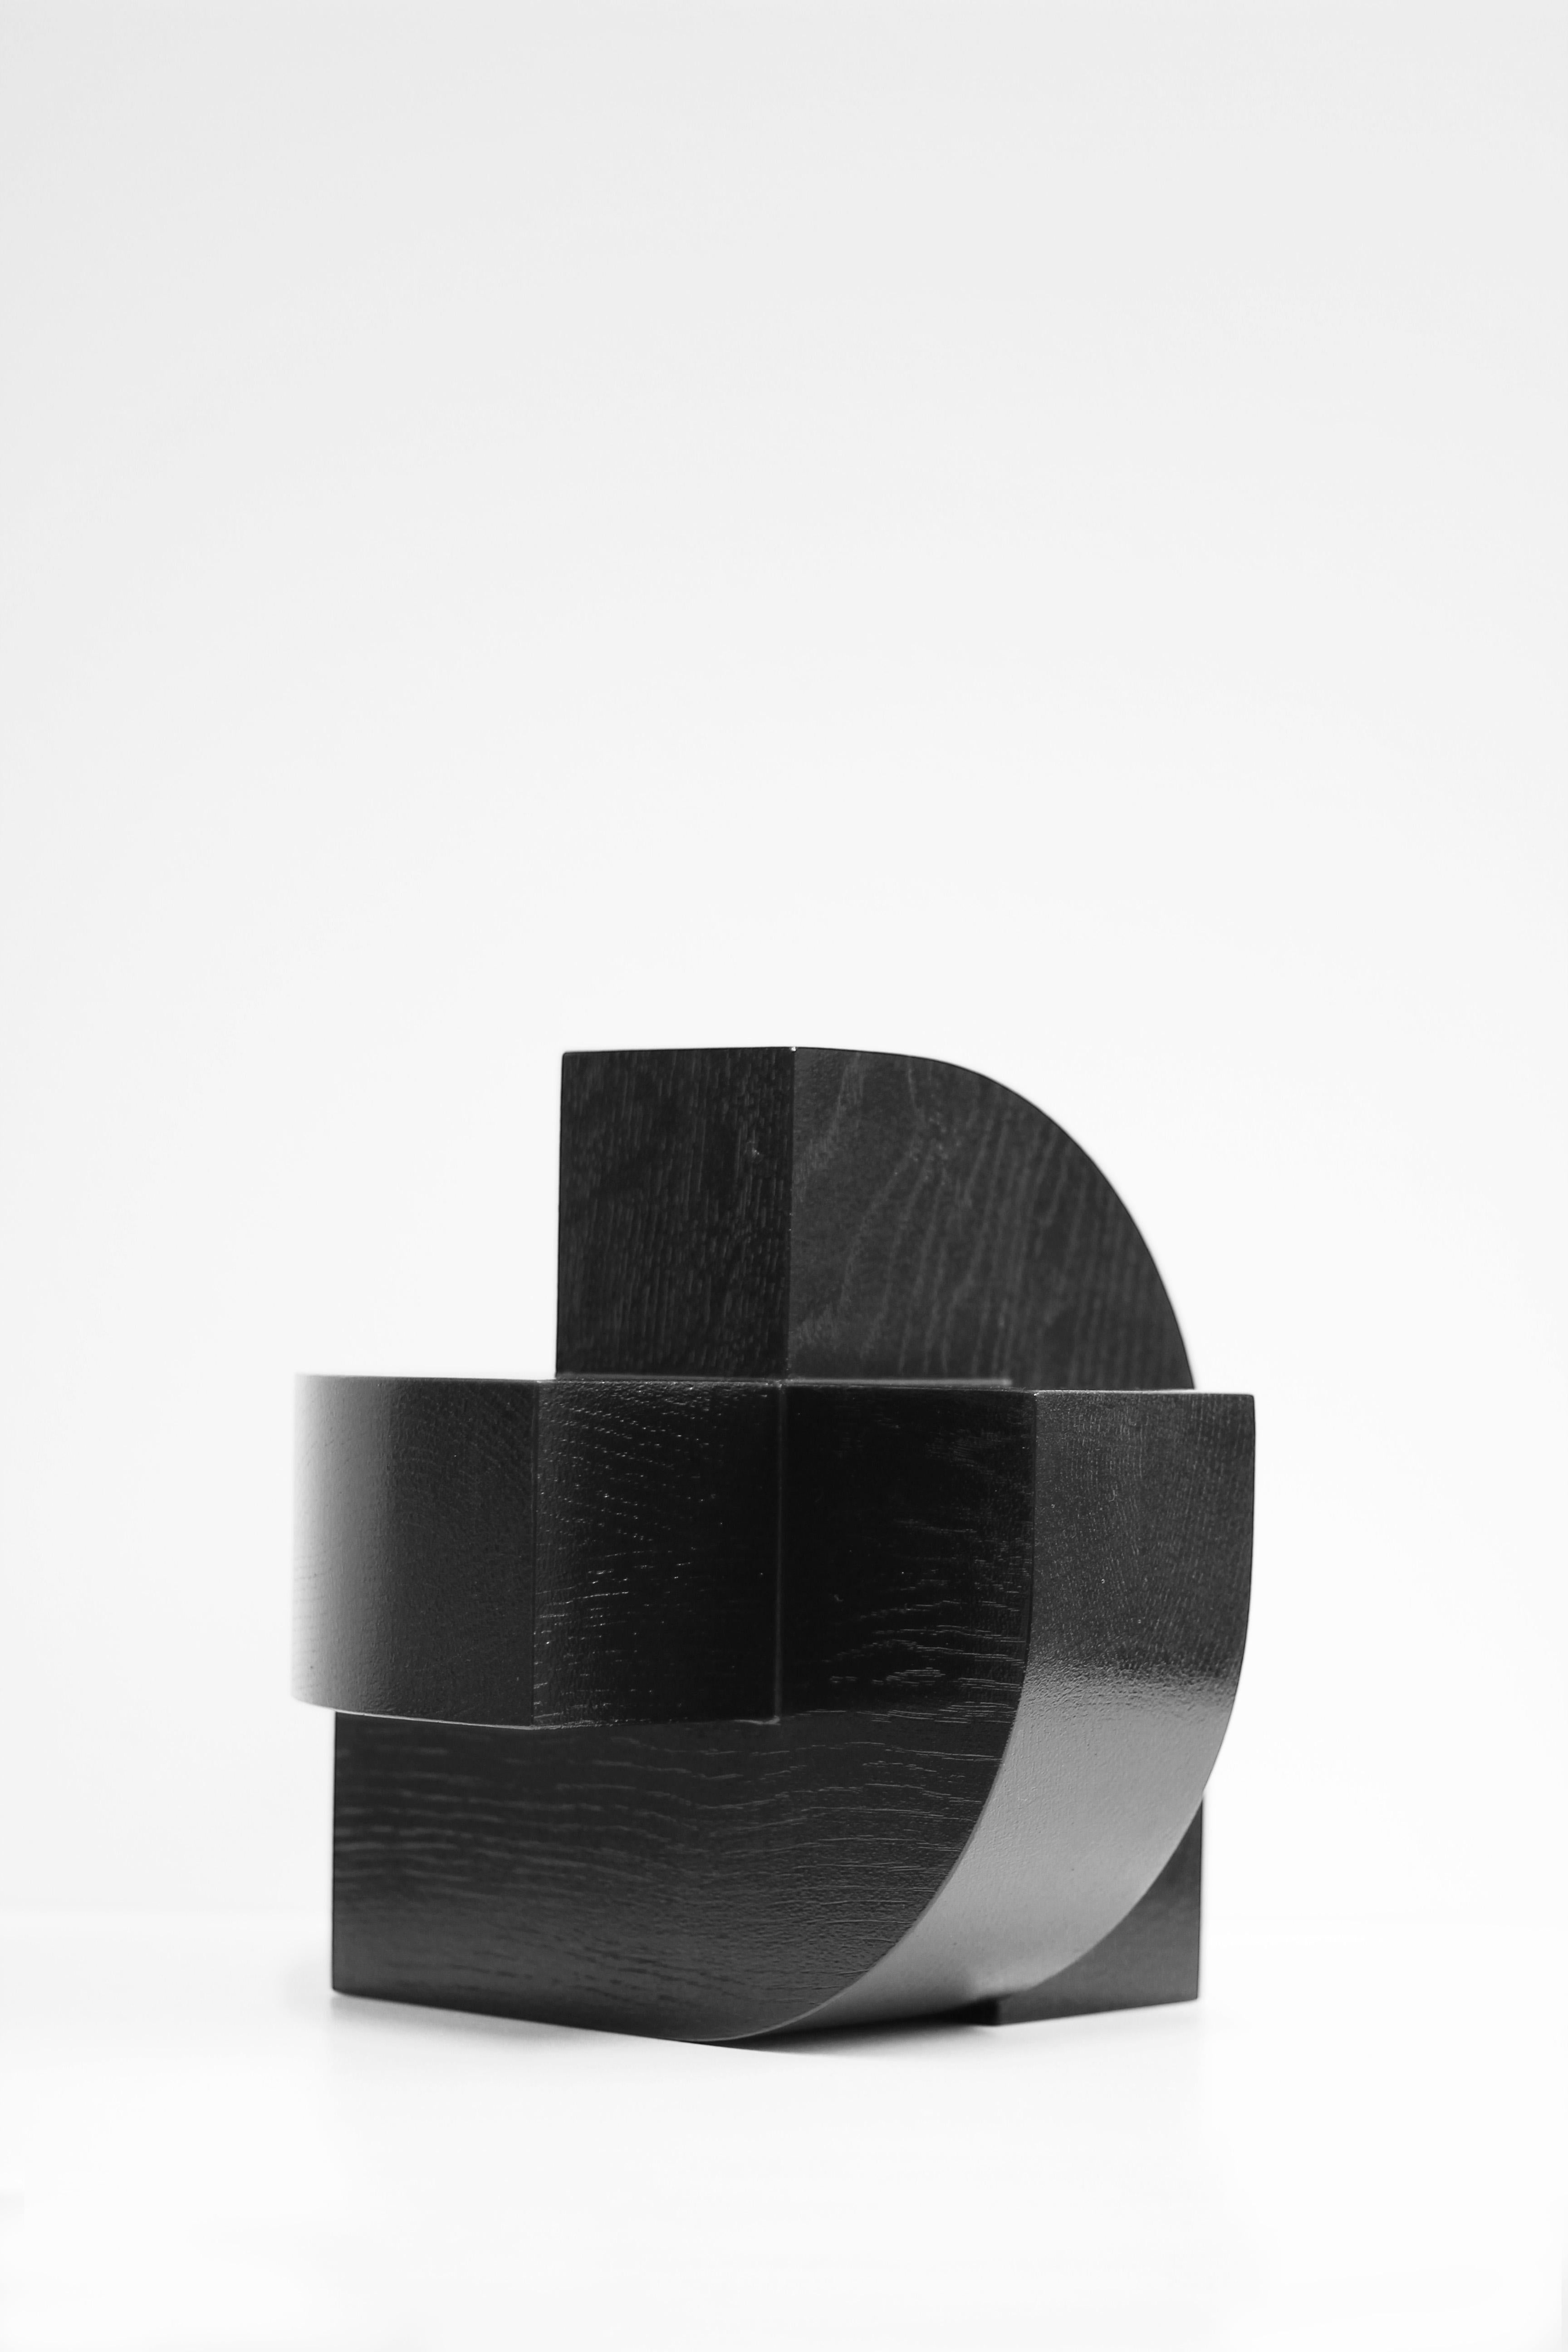 Hand-Crafted Black solid oak sculpture, X4 J, by Dutch Studio Verbaan For Sale